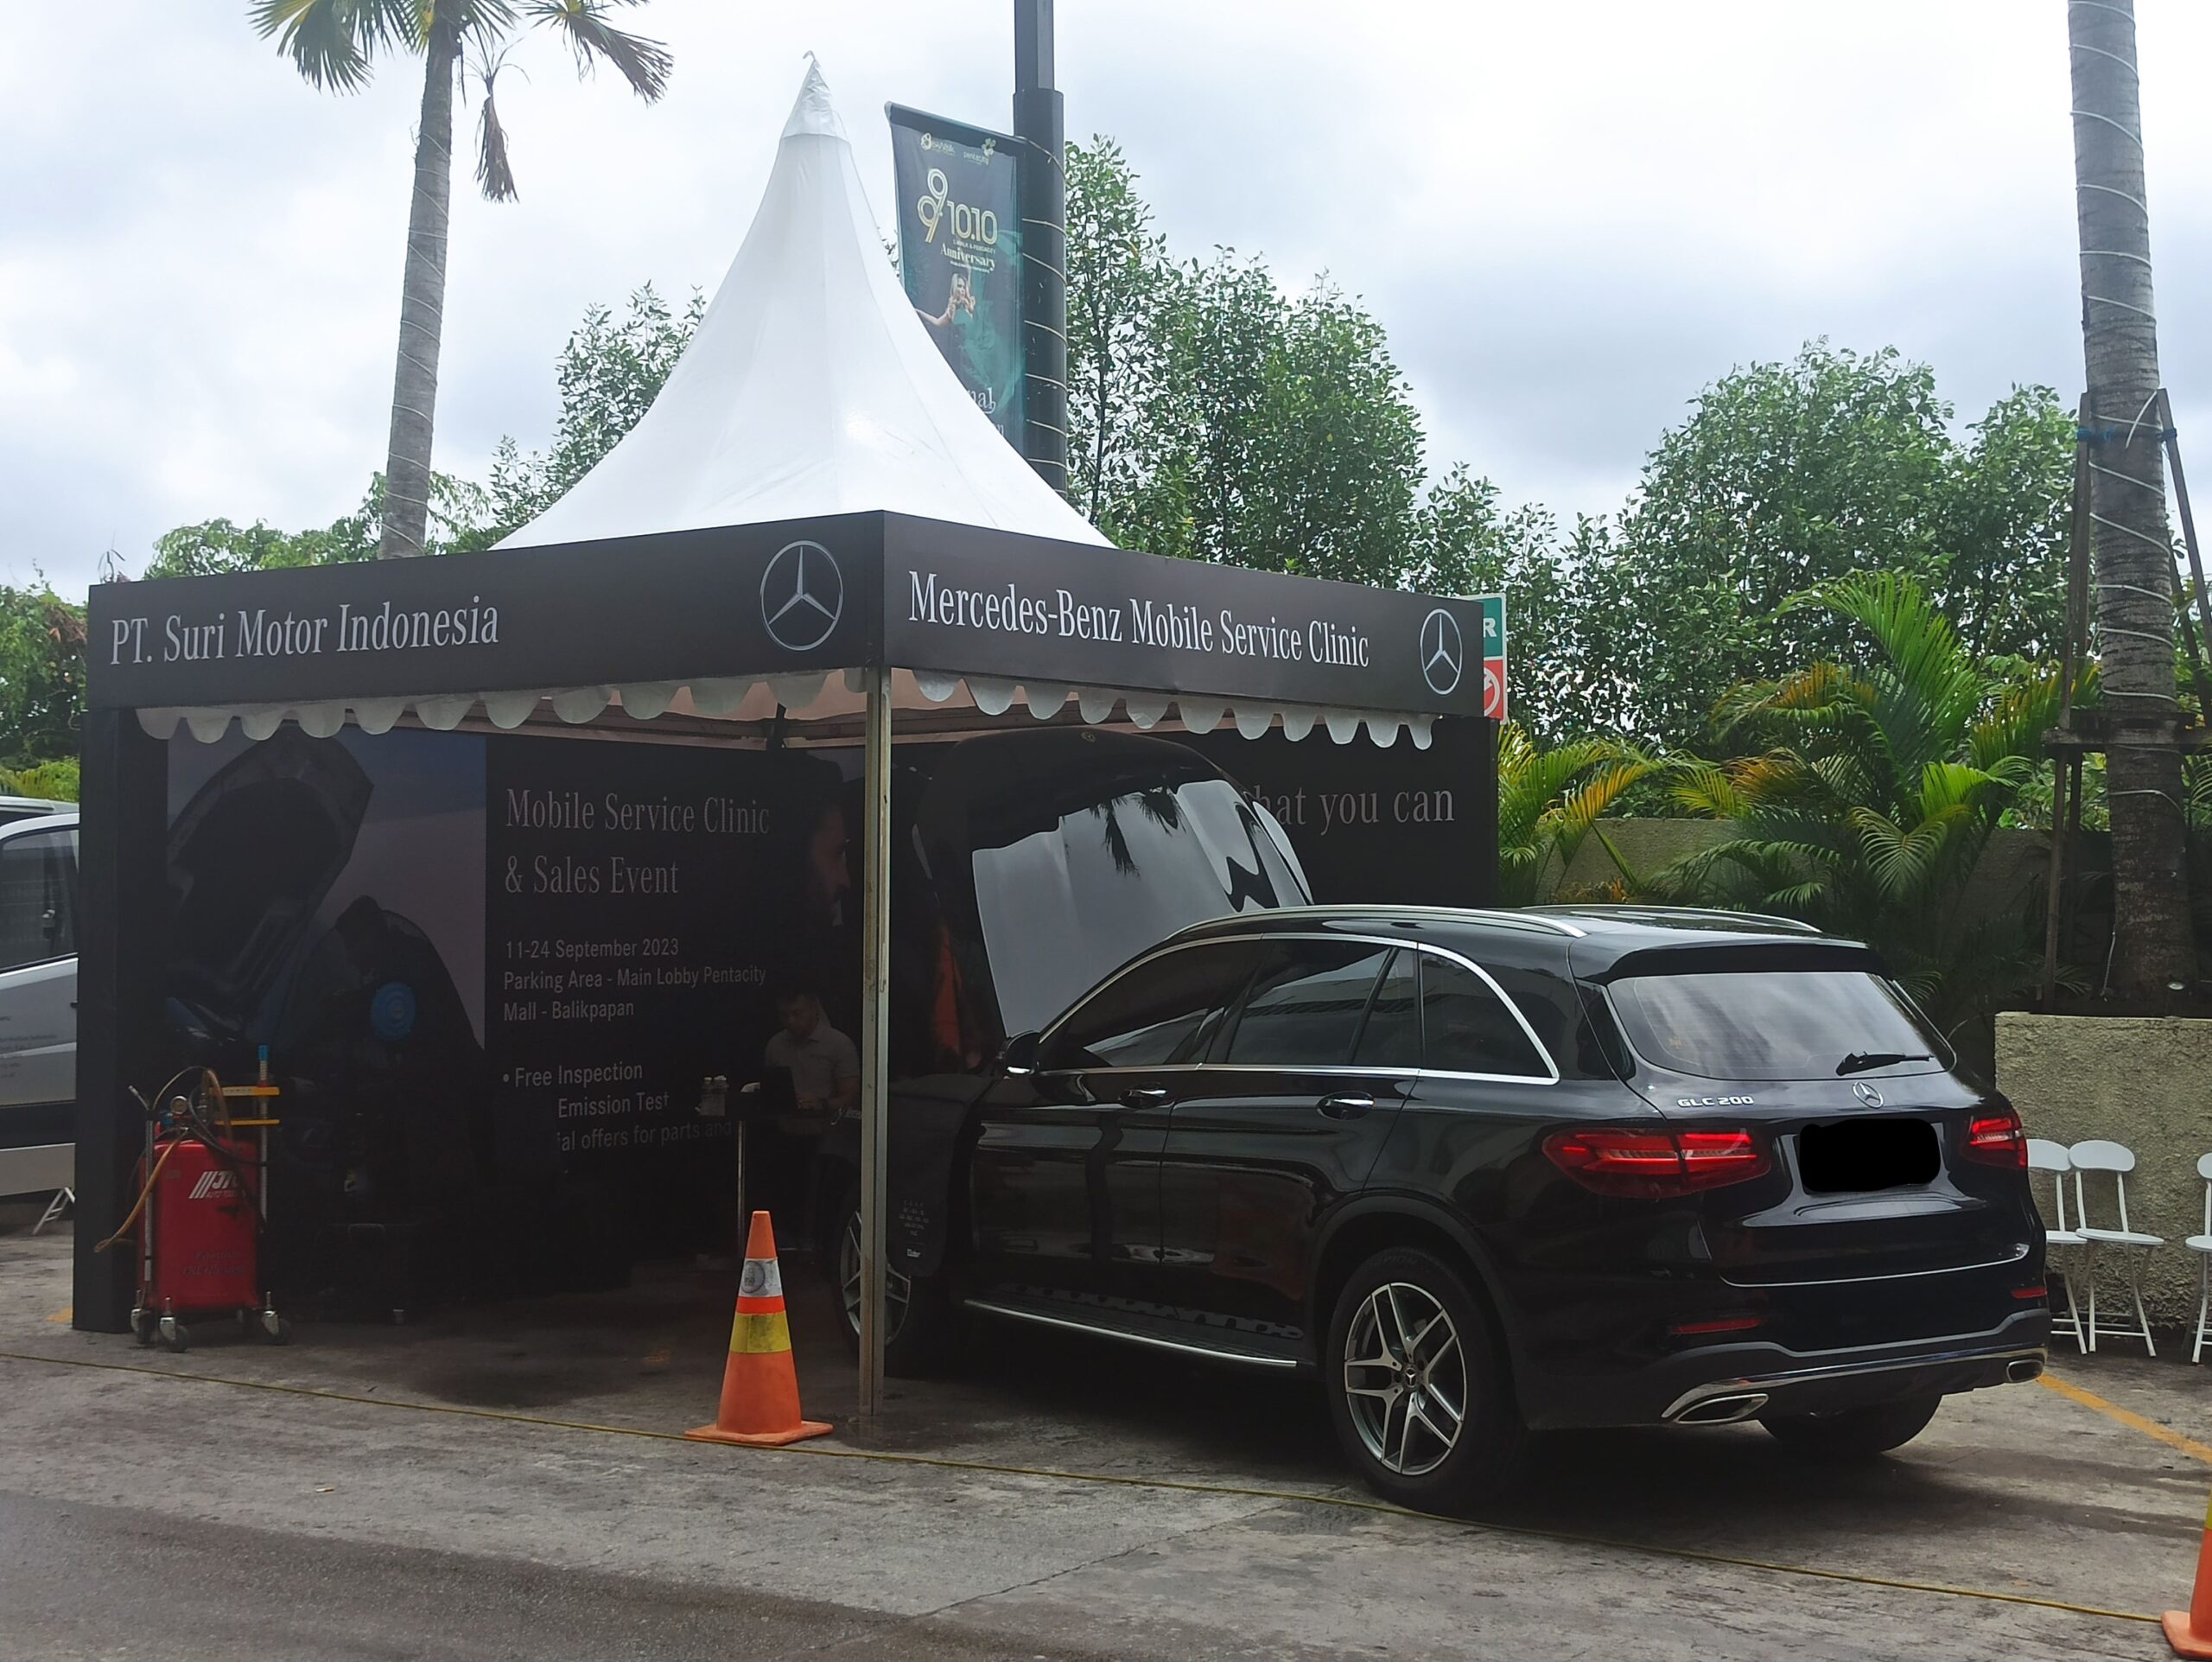 Mercedes-Benz Mobile Service Clinic and Sales Event Hadir Perdana di Balikpapan